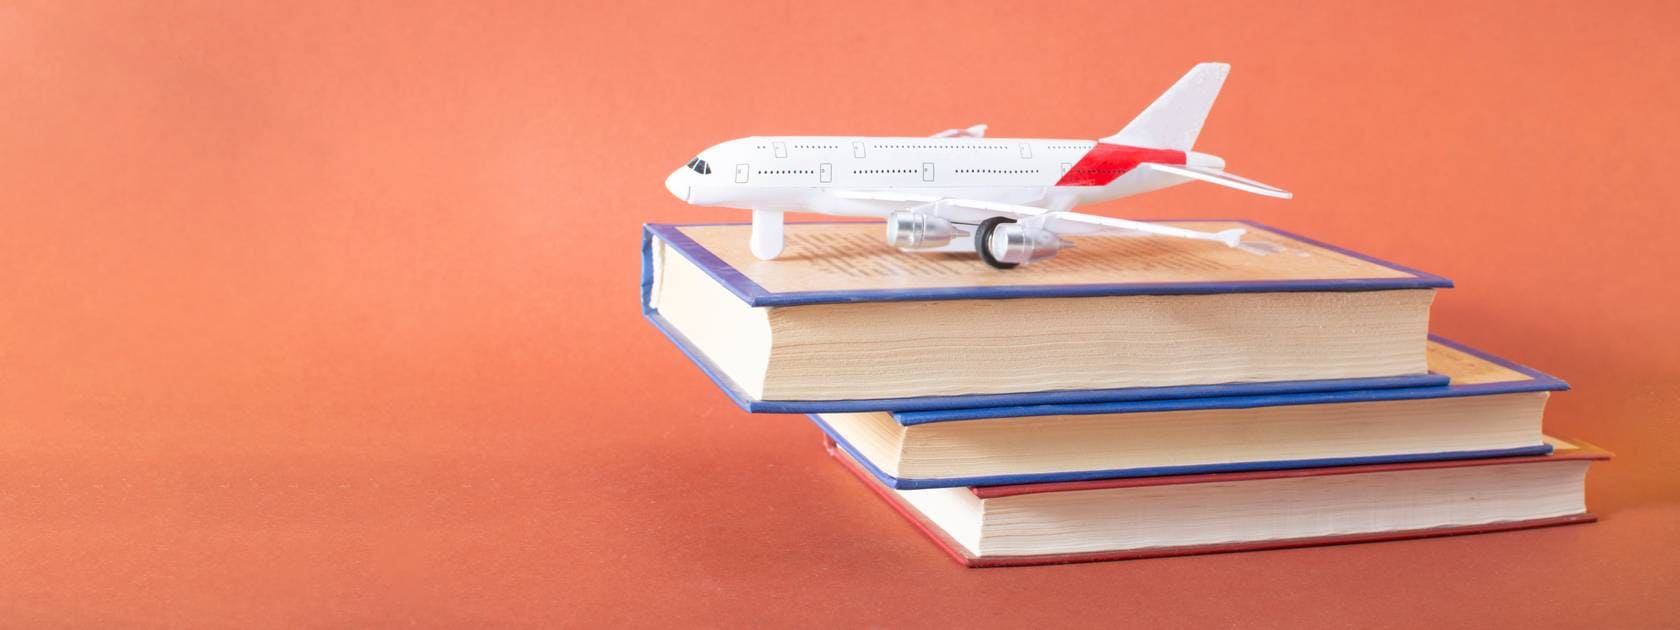 Plane on books.